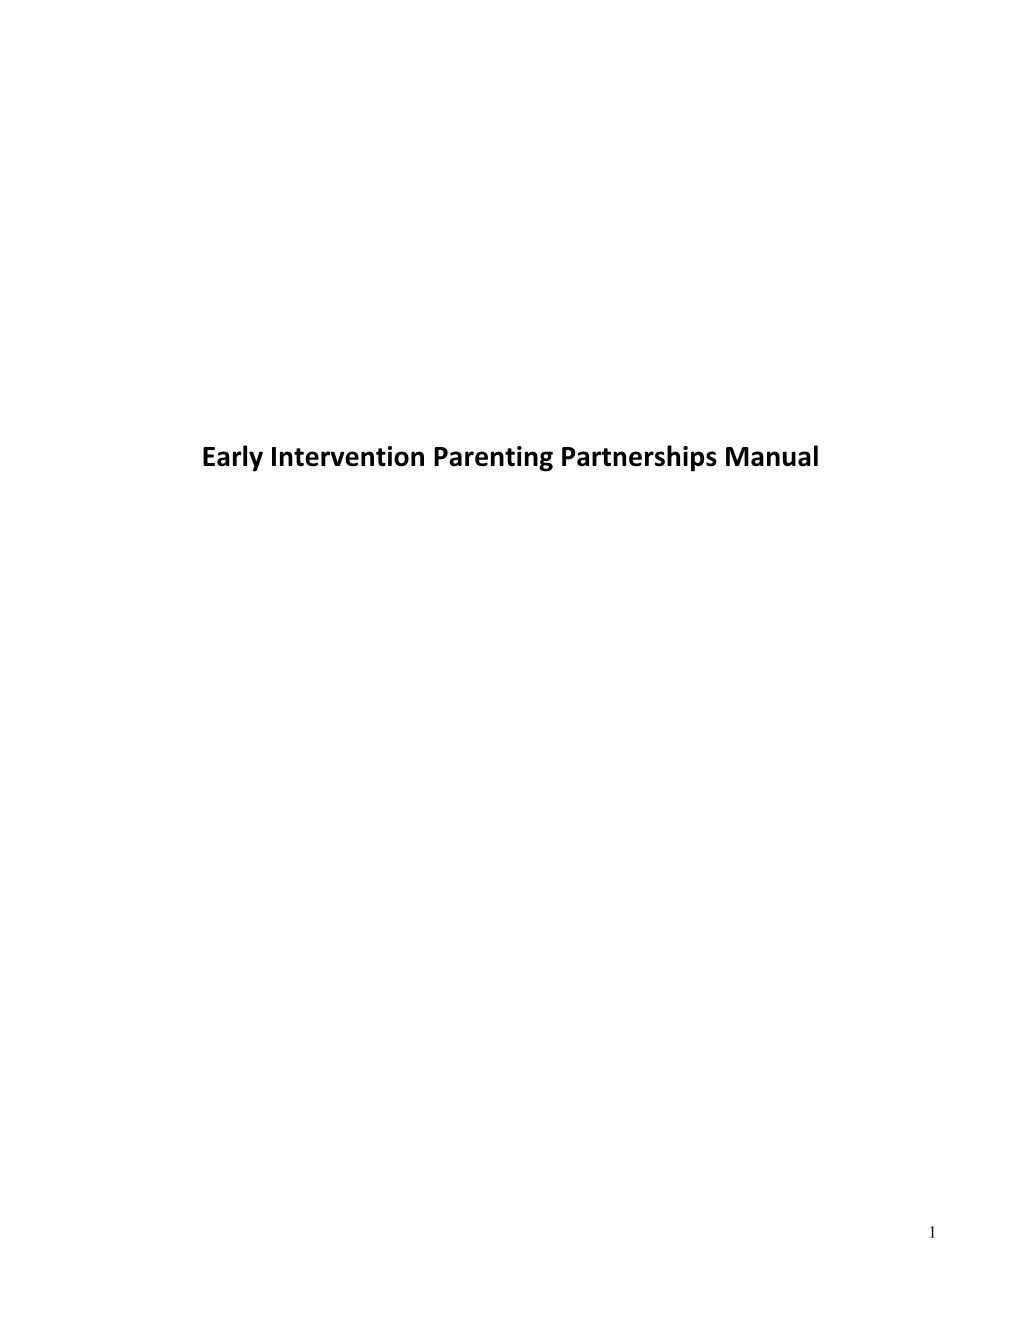 EIPP Program Manual